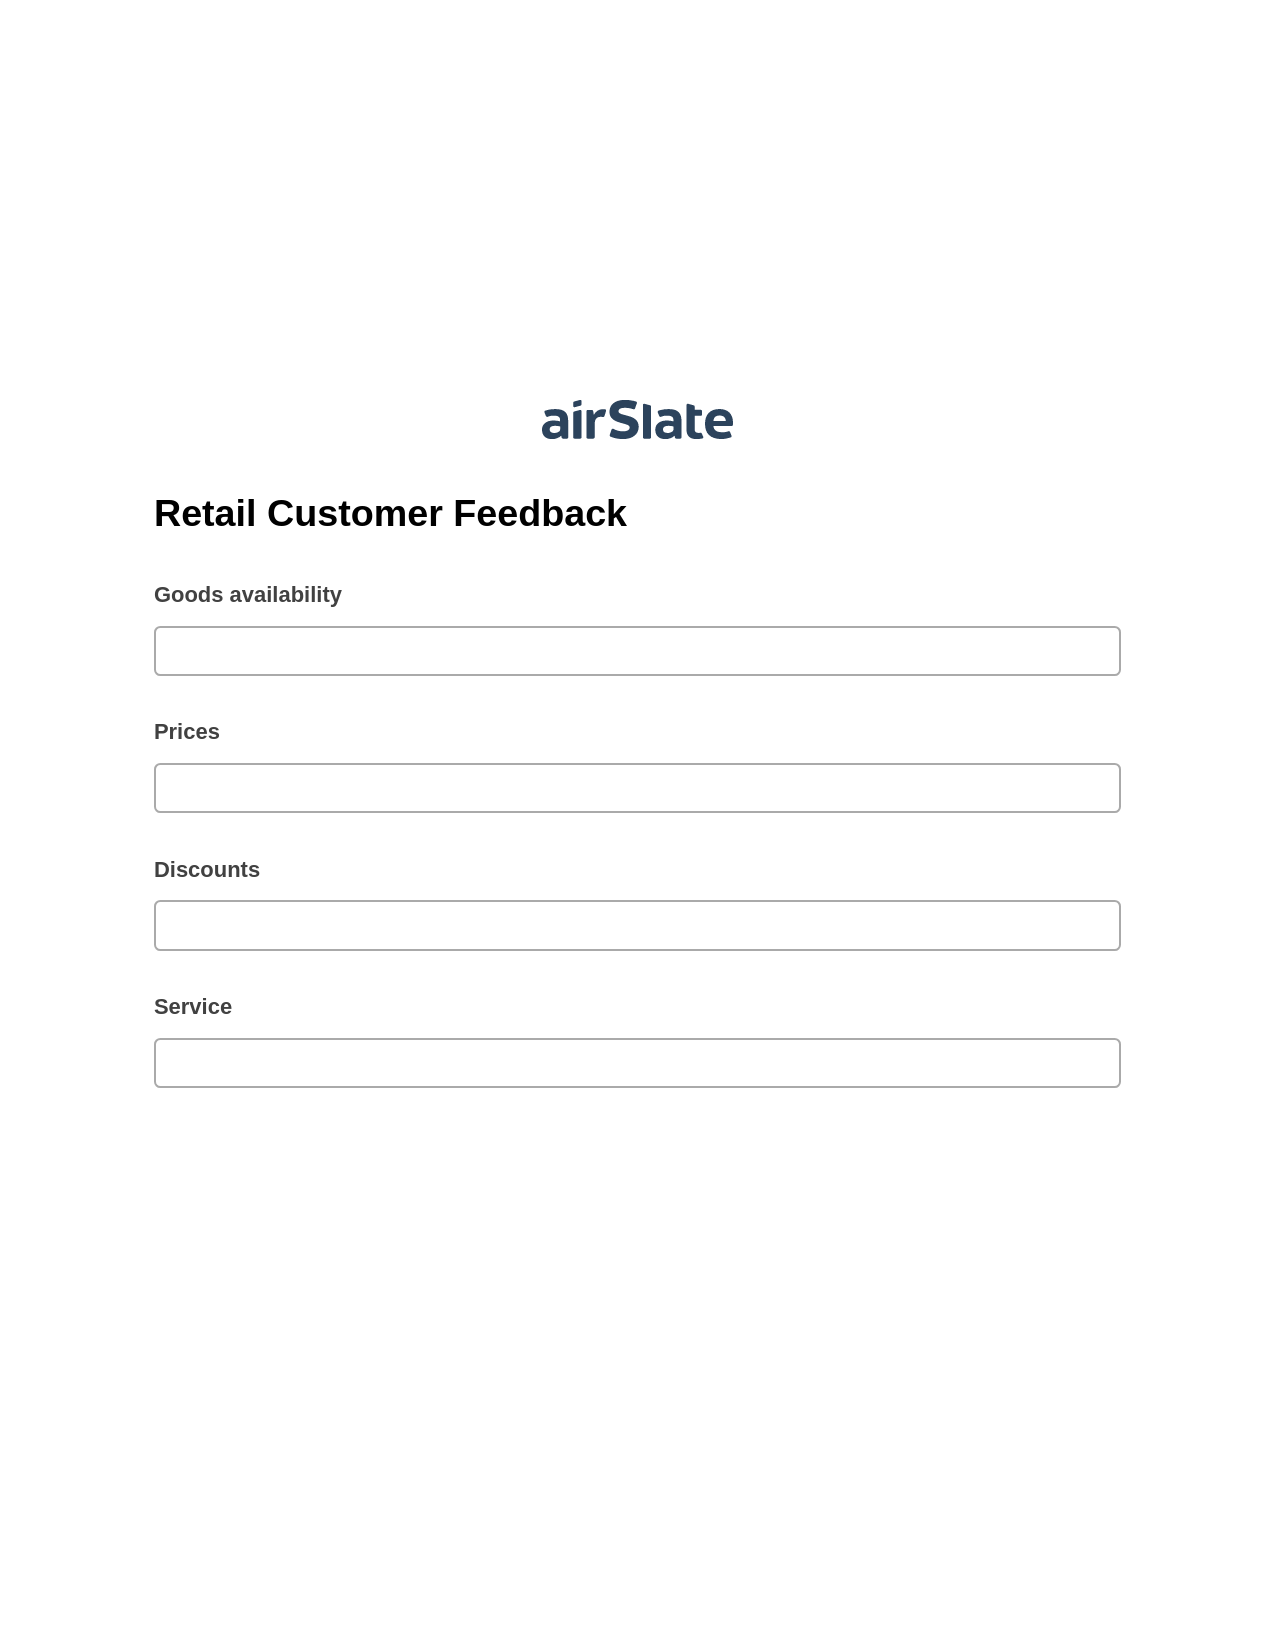 Retail Customer Feedback Pre-fill Slate from MS Dynamics 365 Records Bot, Create QuickBooks invoice Bot, Webhook Postfinish Bot